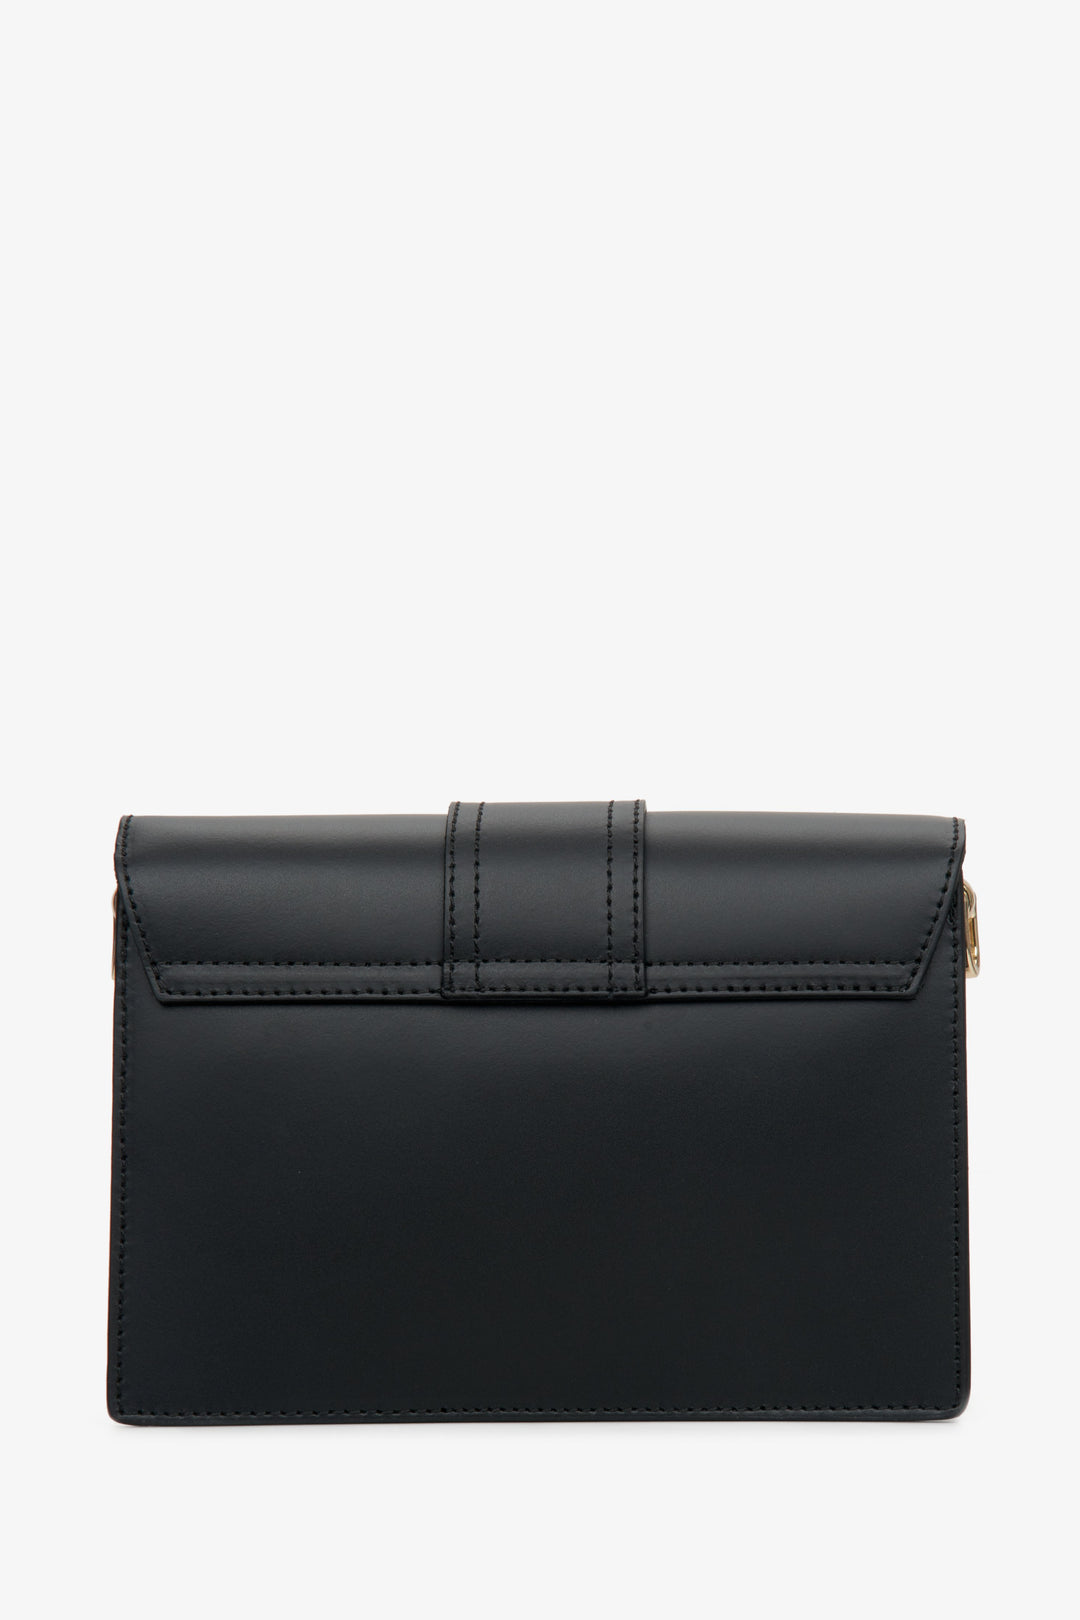 Small, elegant black women's shoulder bag made in Italy - reverse.